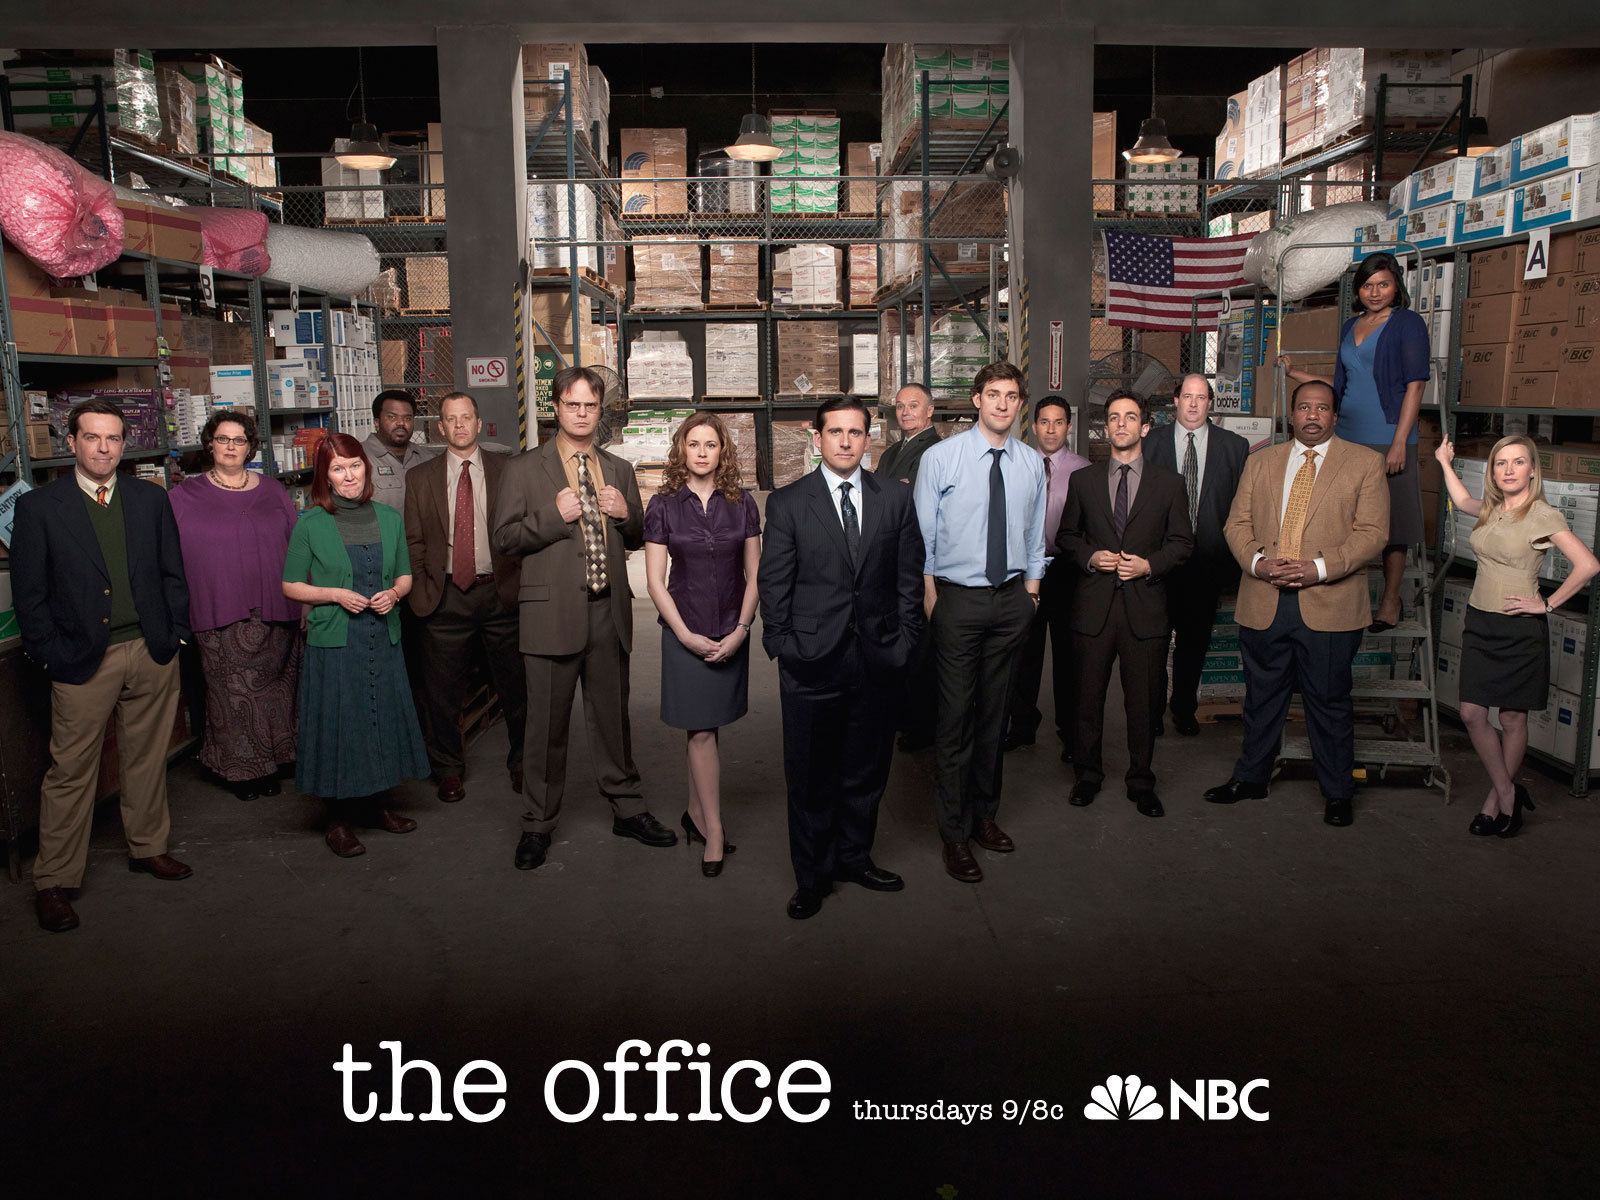 Dunder Mifflin Infinity - The Office TV Show (Season 4)